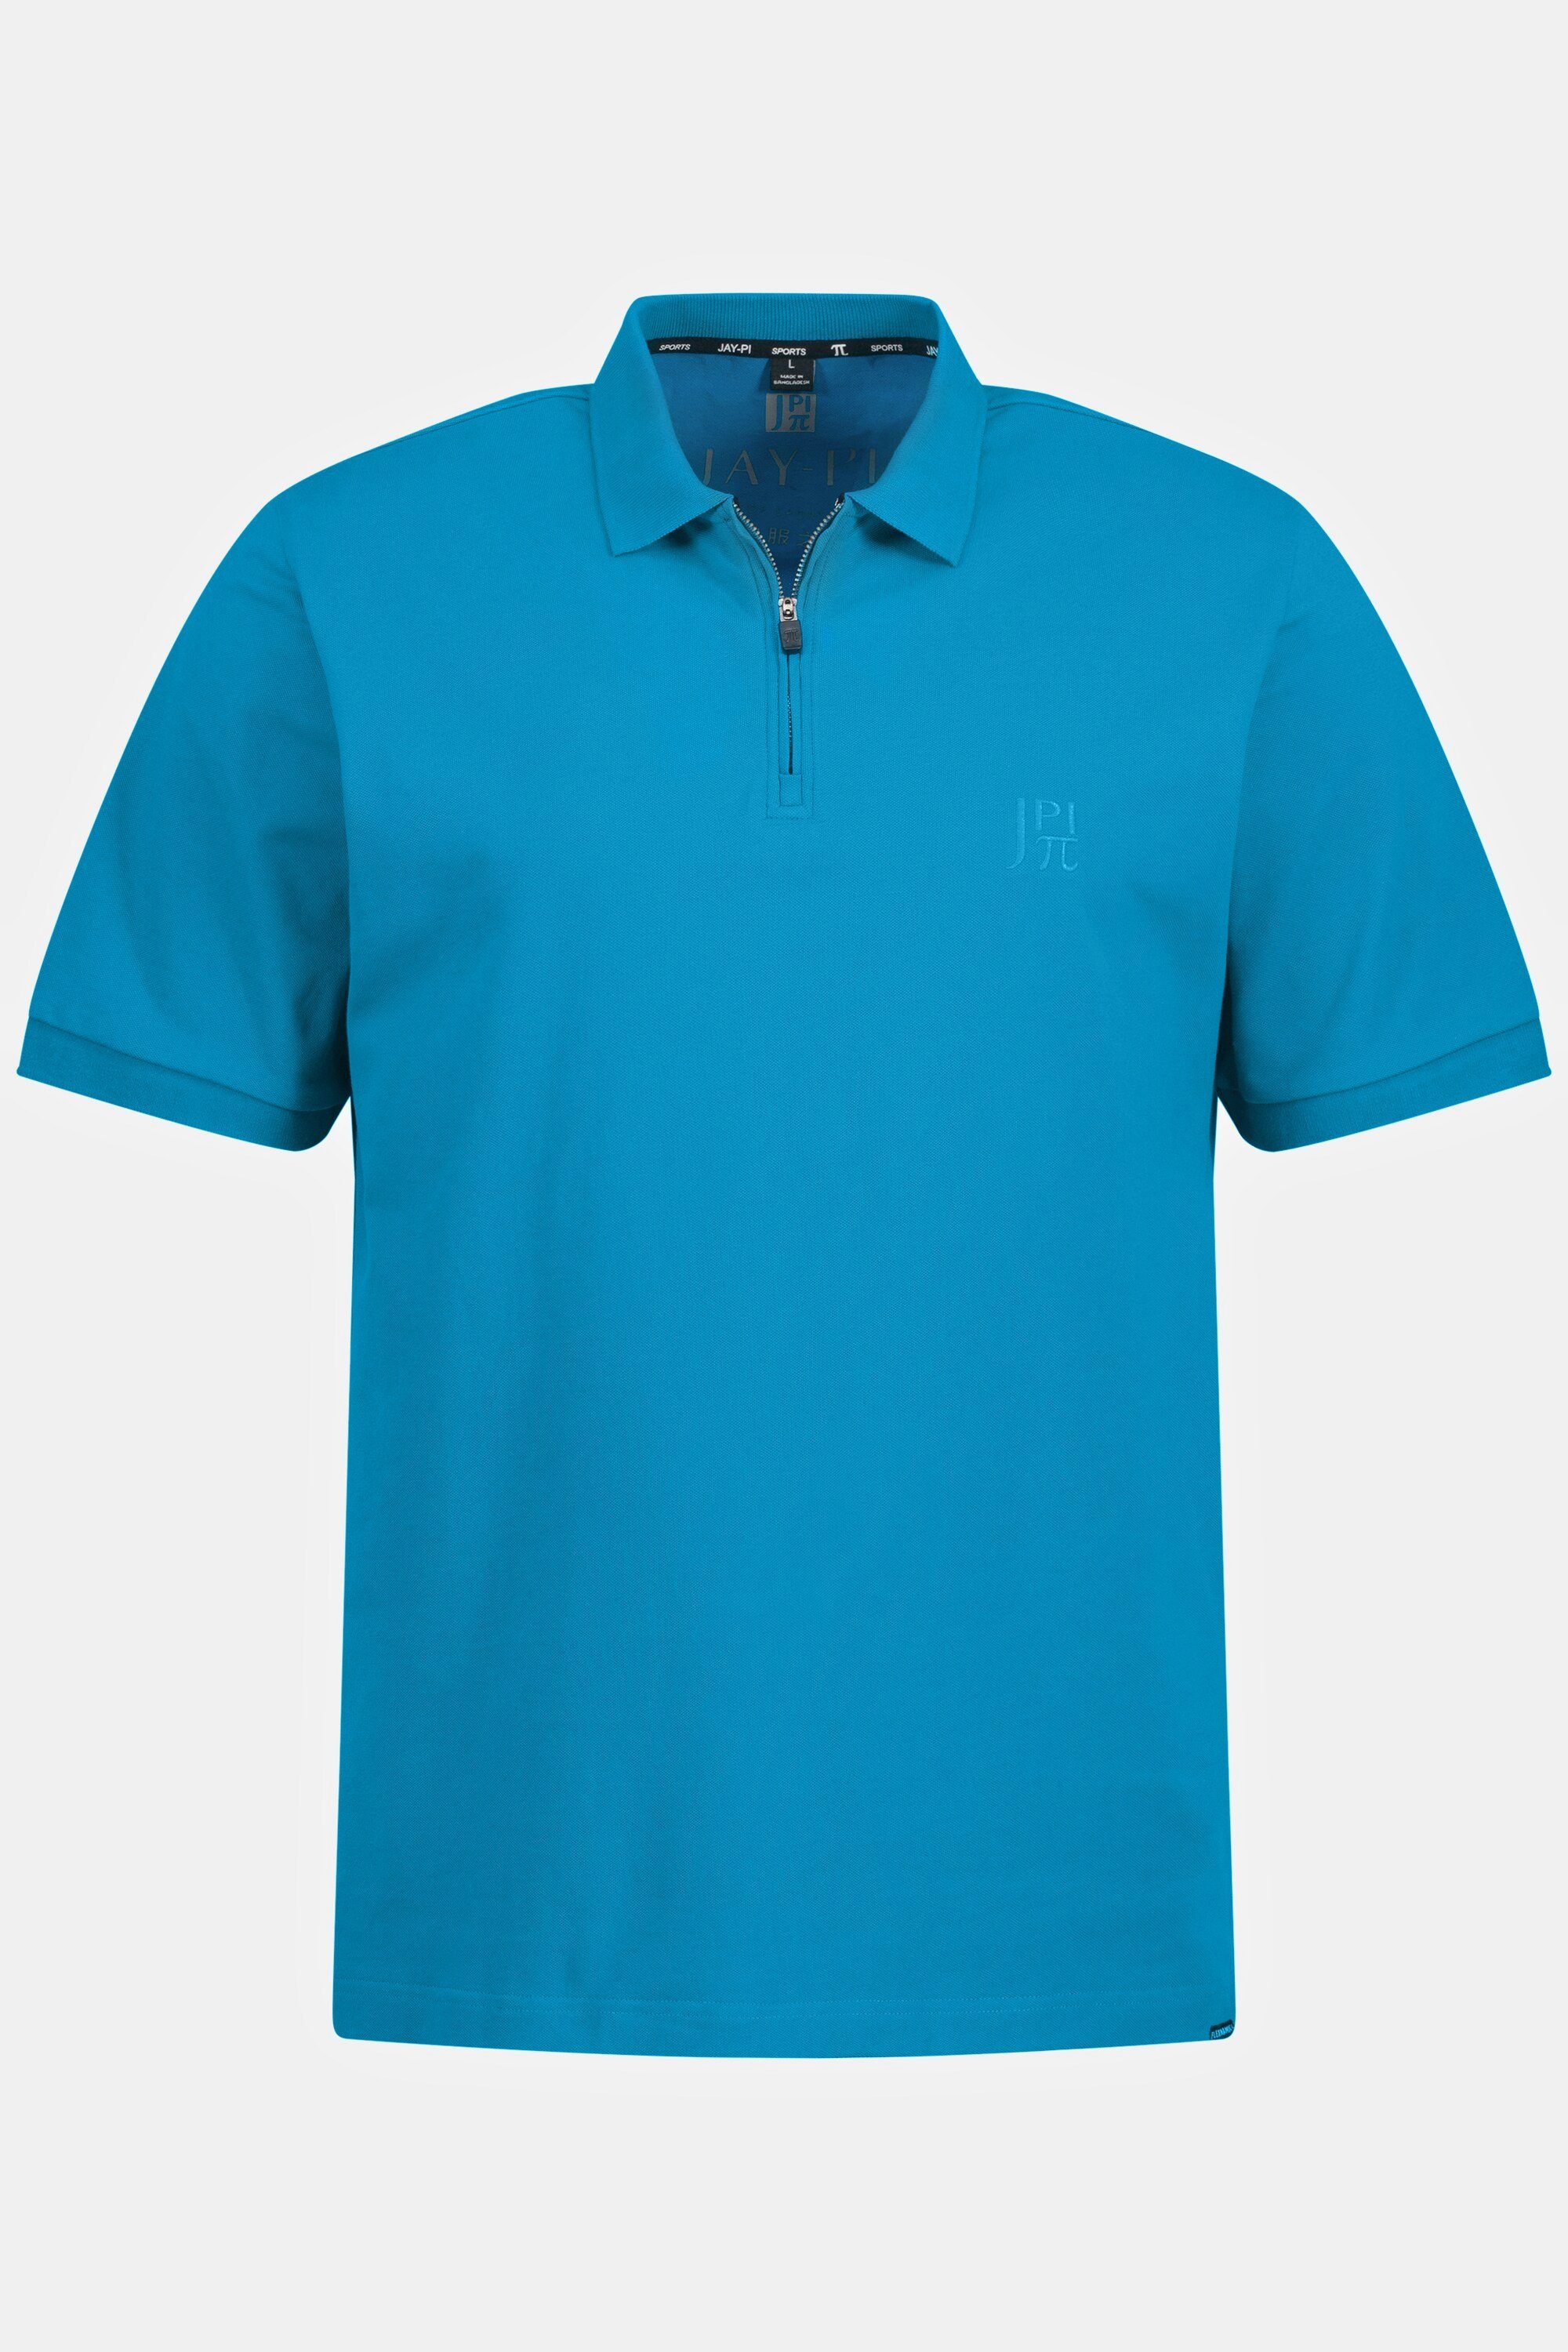 Piqué Outdoot JP1880 tiefseeblau FLEXNAMIC® Halbarm Poloshirt Poloshirt